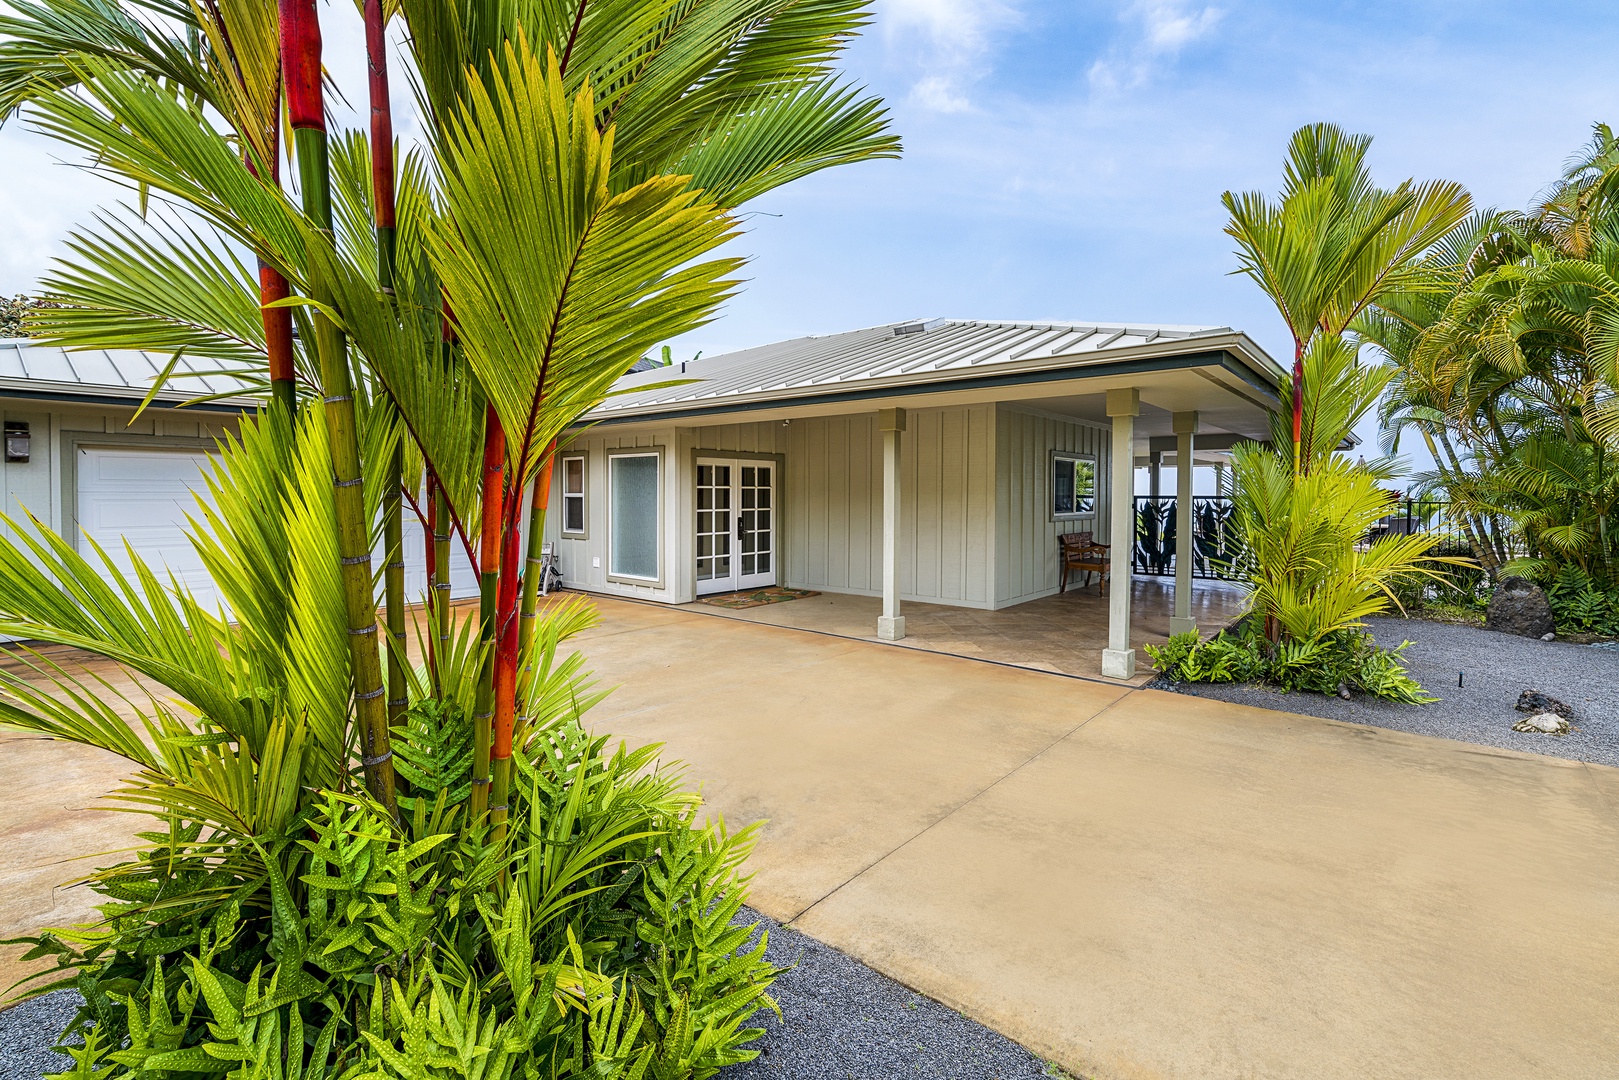 Kailua Kona Vacation Rentals, Sunset Hale - Sunset Hale